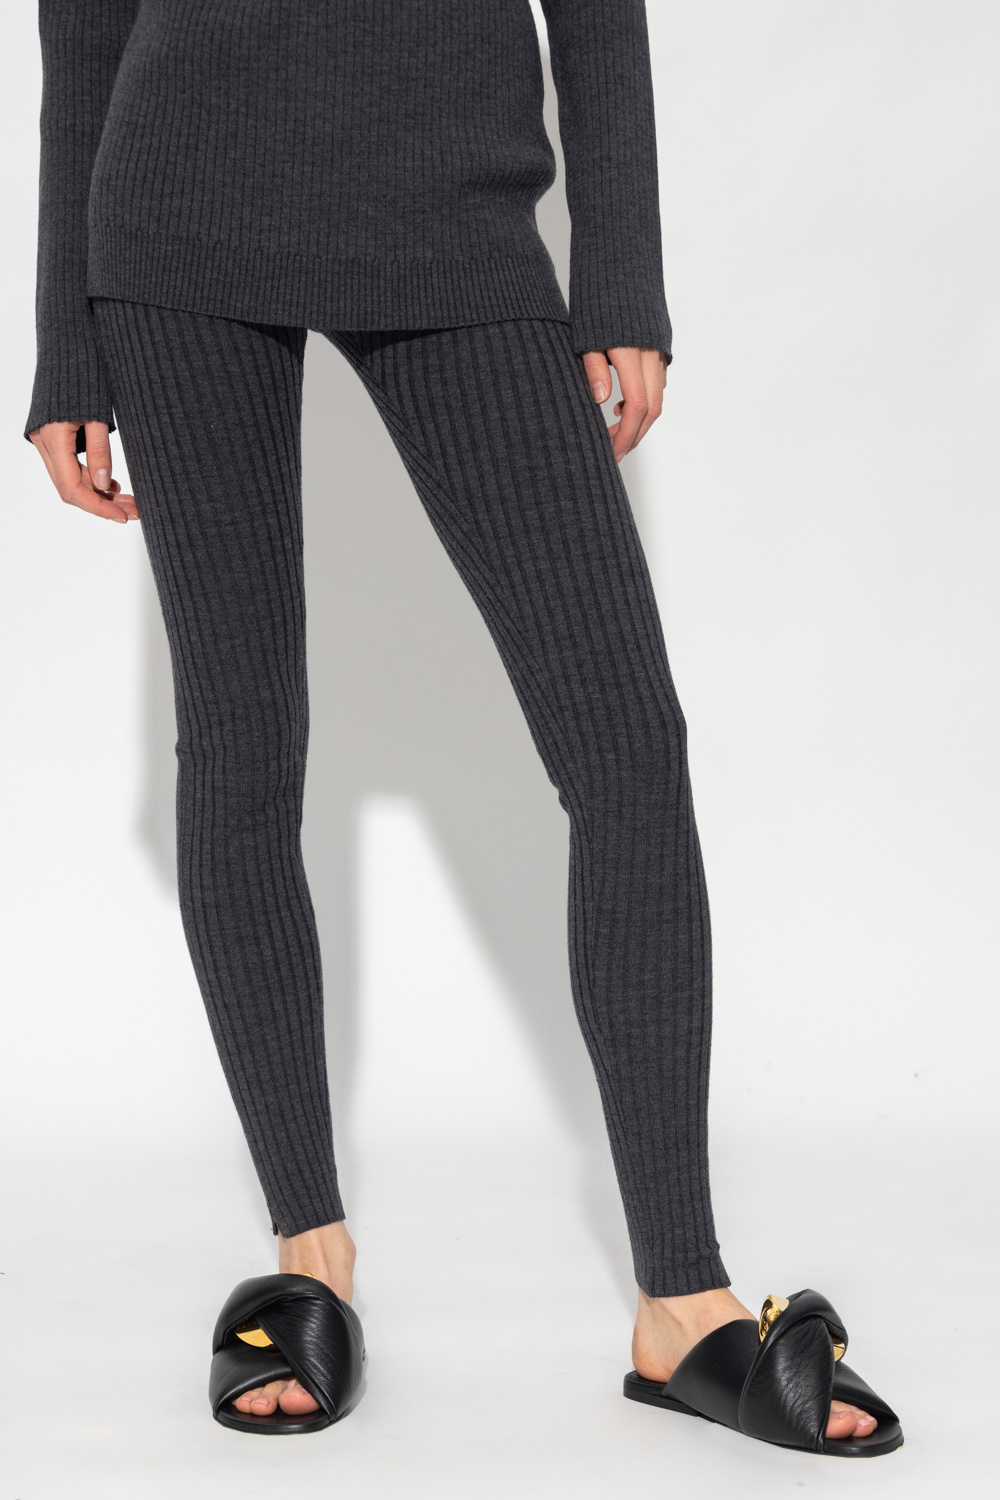 Toteme Charcoal Grey Rib Knit Wool Leggings - S / M (6) – I MISS